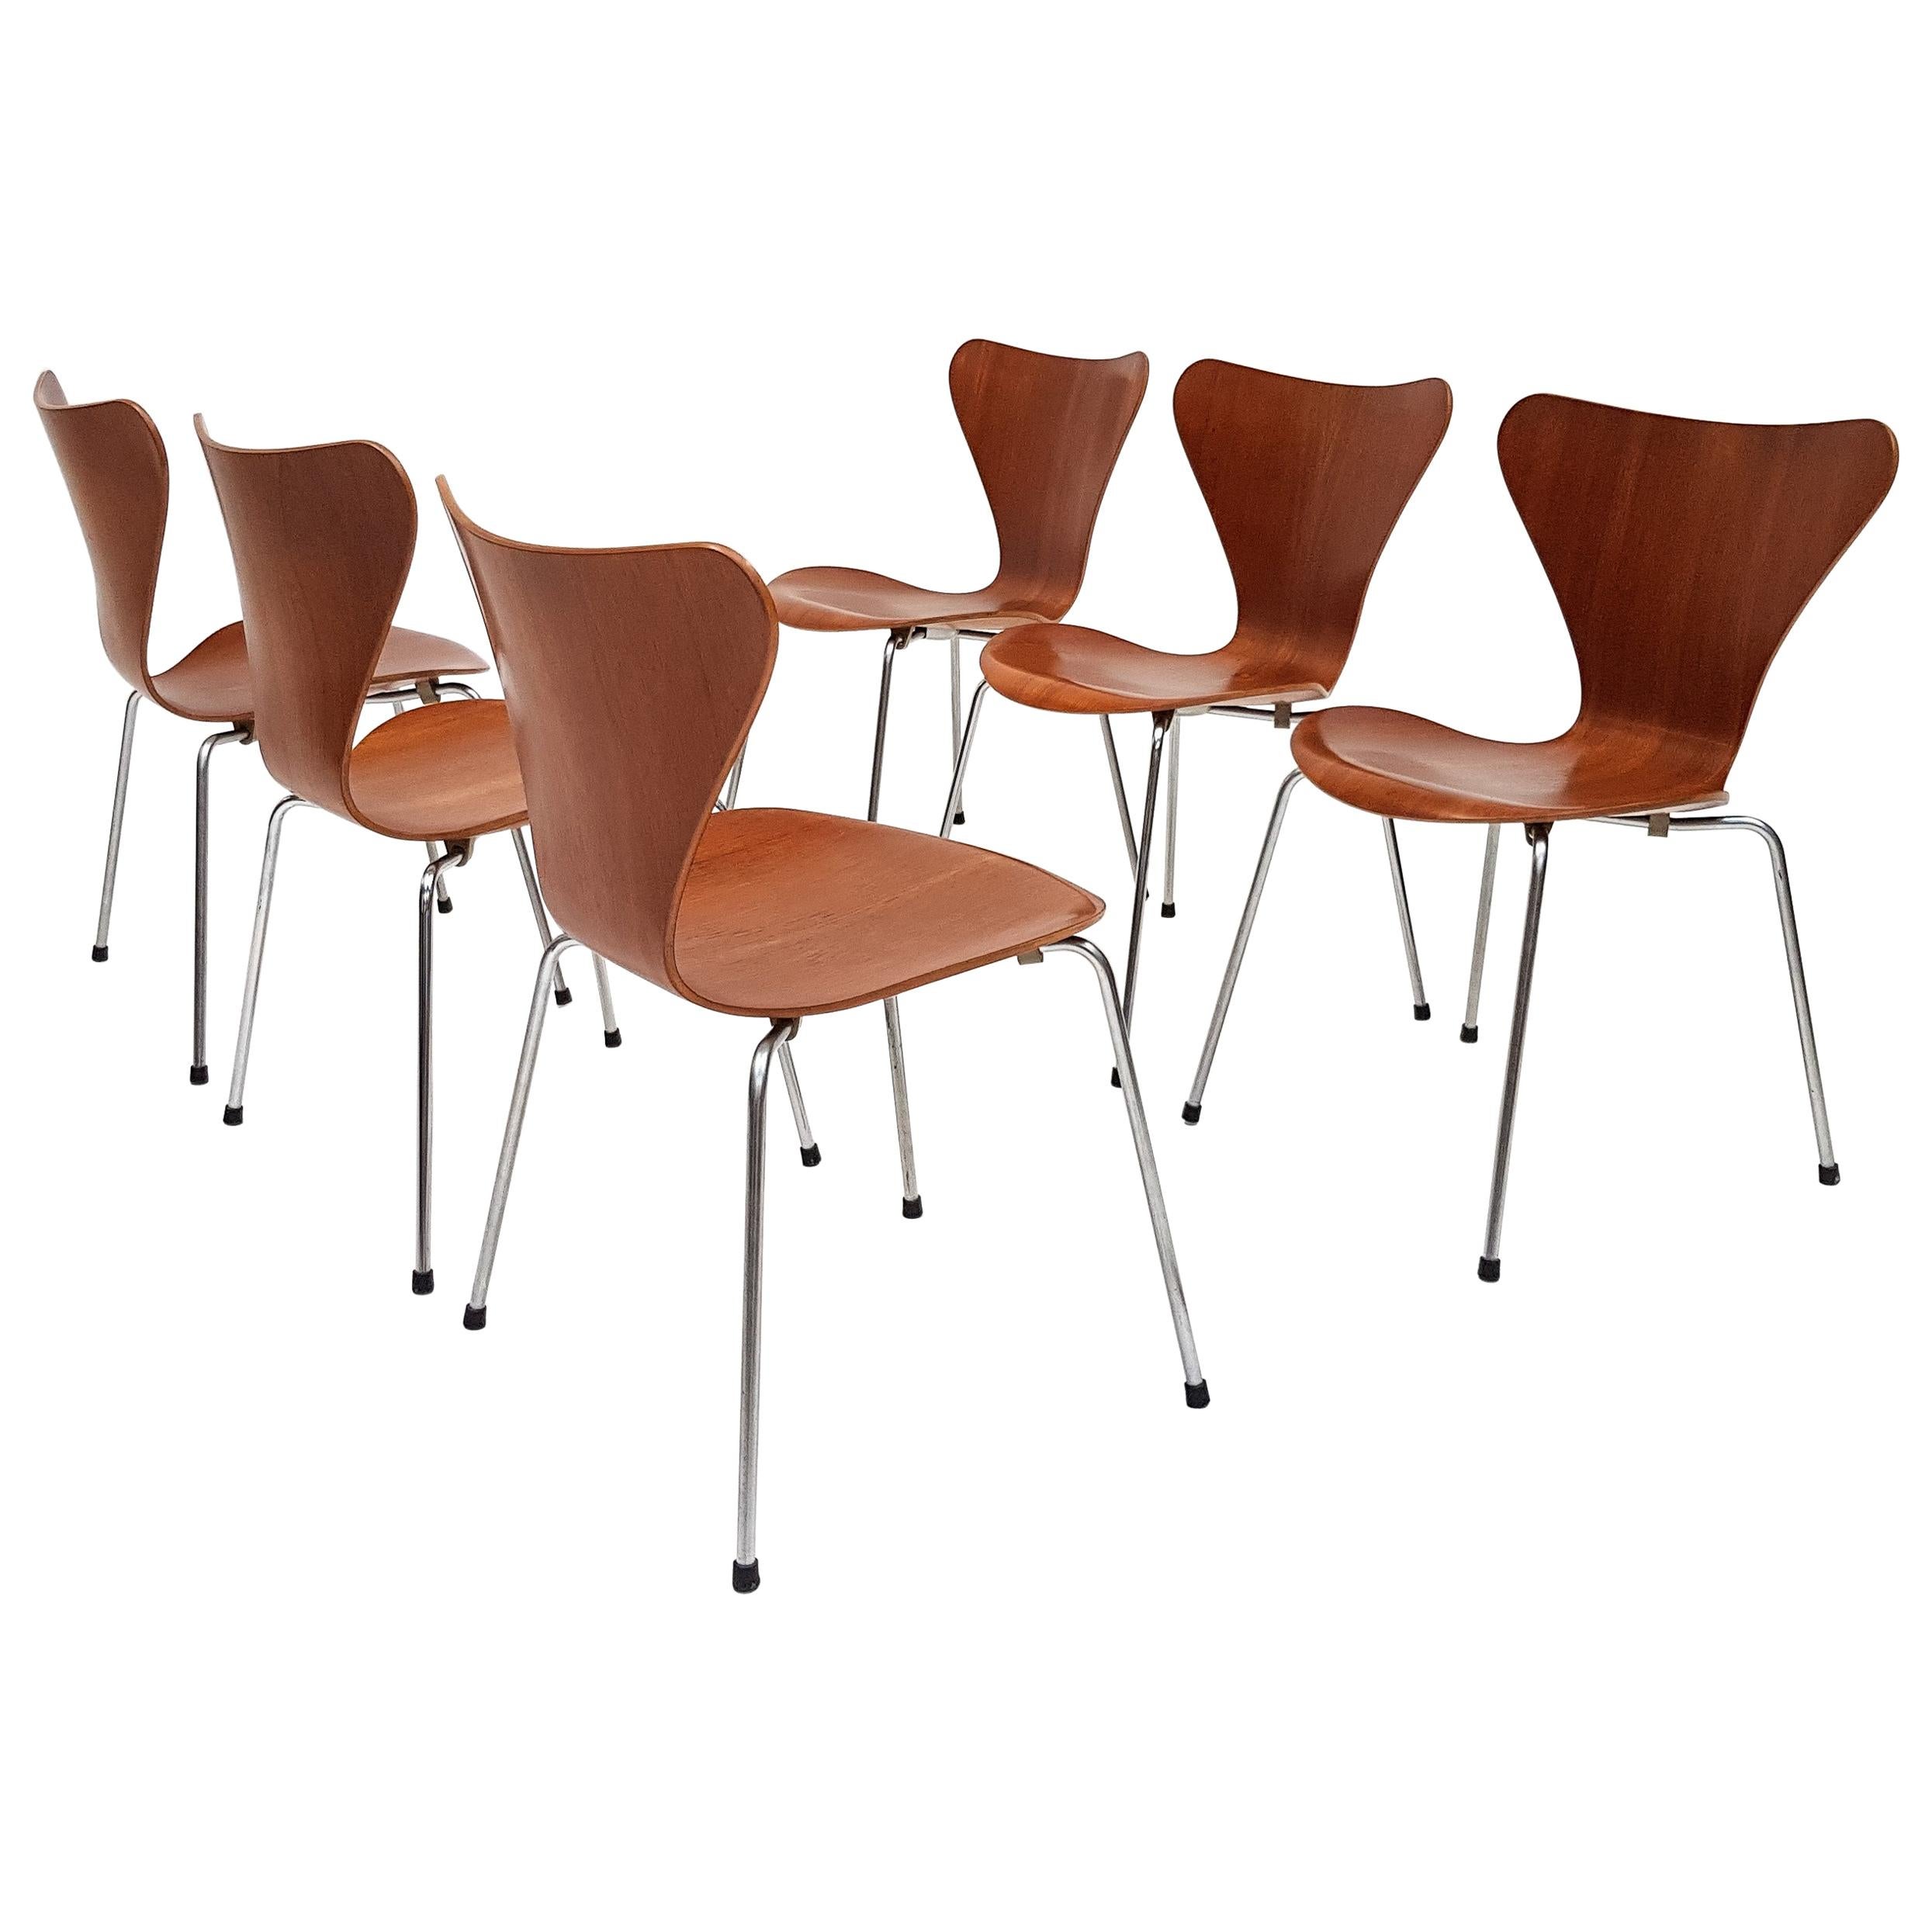 Set of 6 Arne Jacobsen "Series 7" Model 3107 Chairs in Teak, Designed, 1955